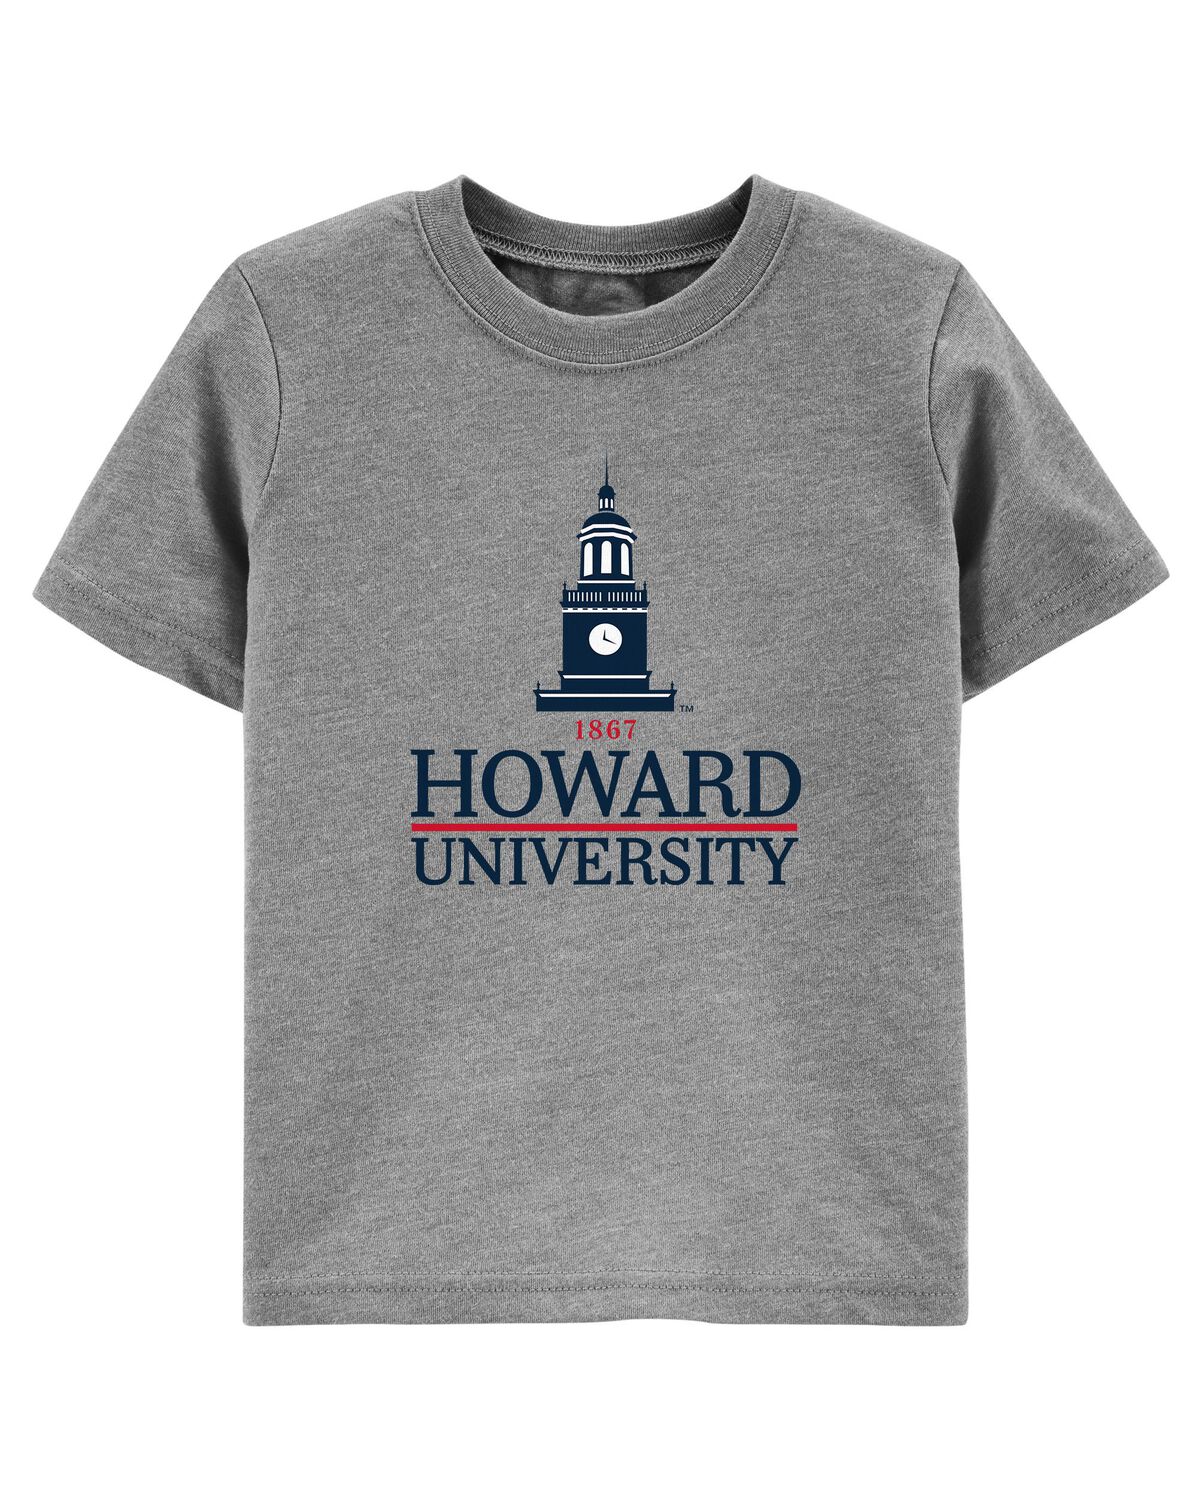 Howard University Toddler Howard University Tee | carters.com